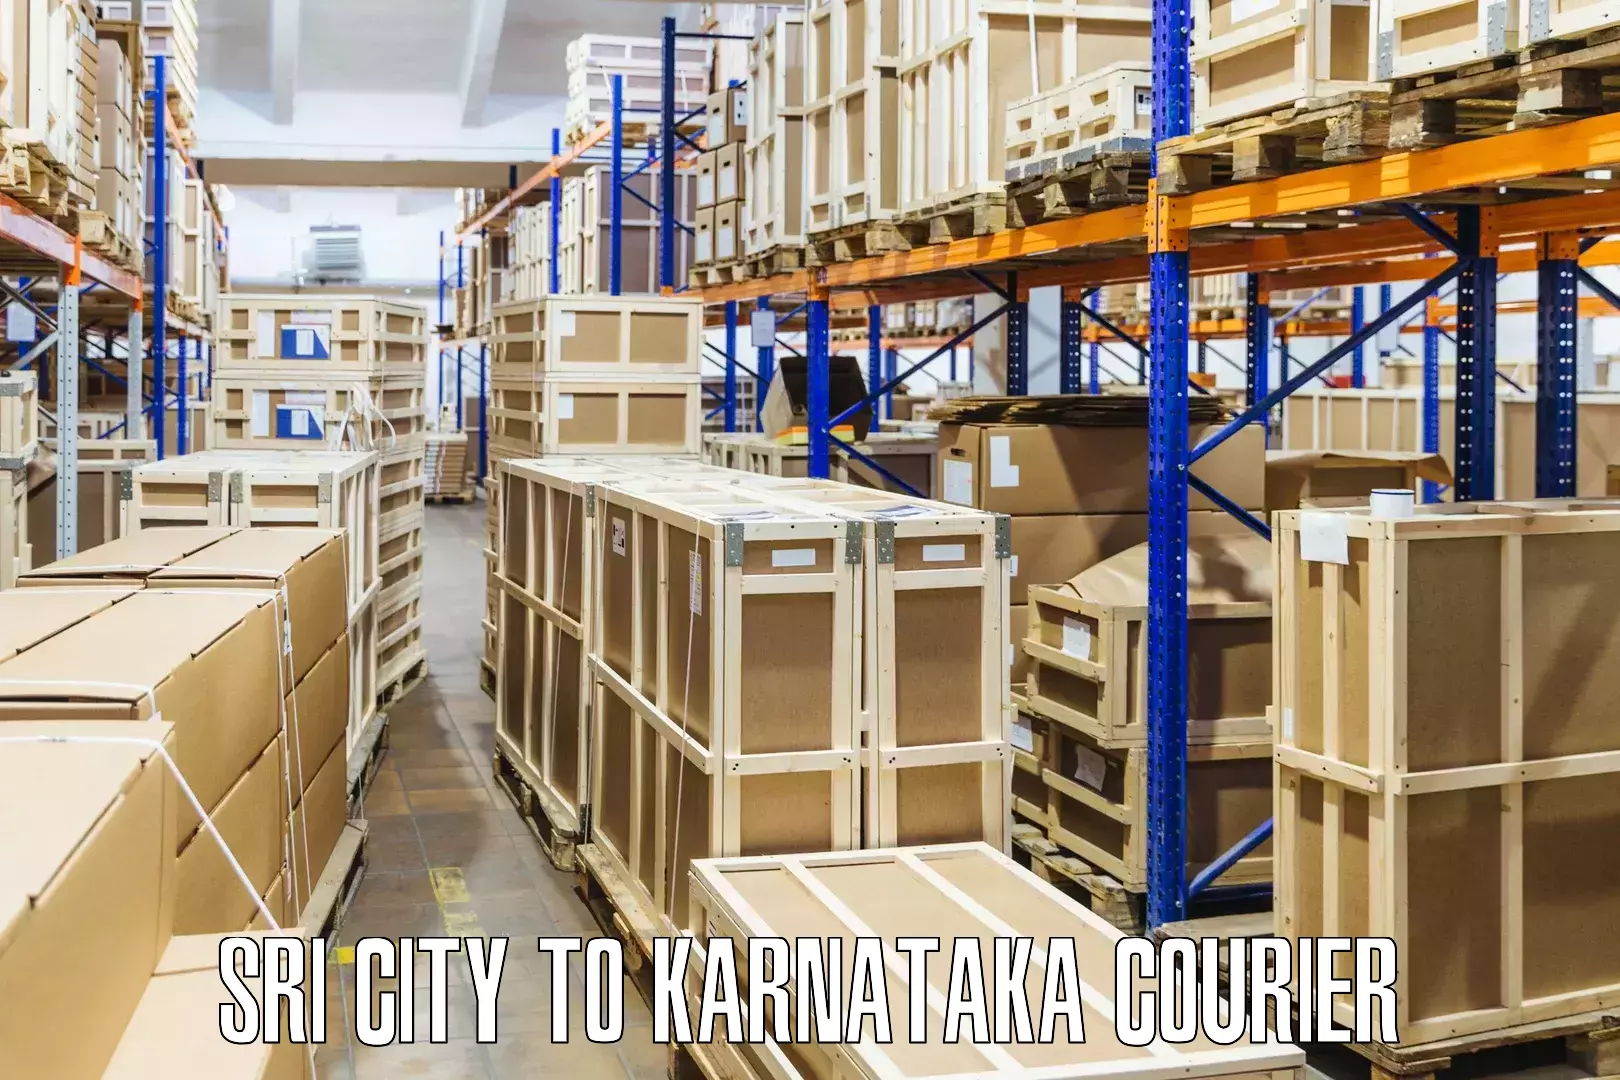 Cargo courier service Sri City to Karnataka